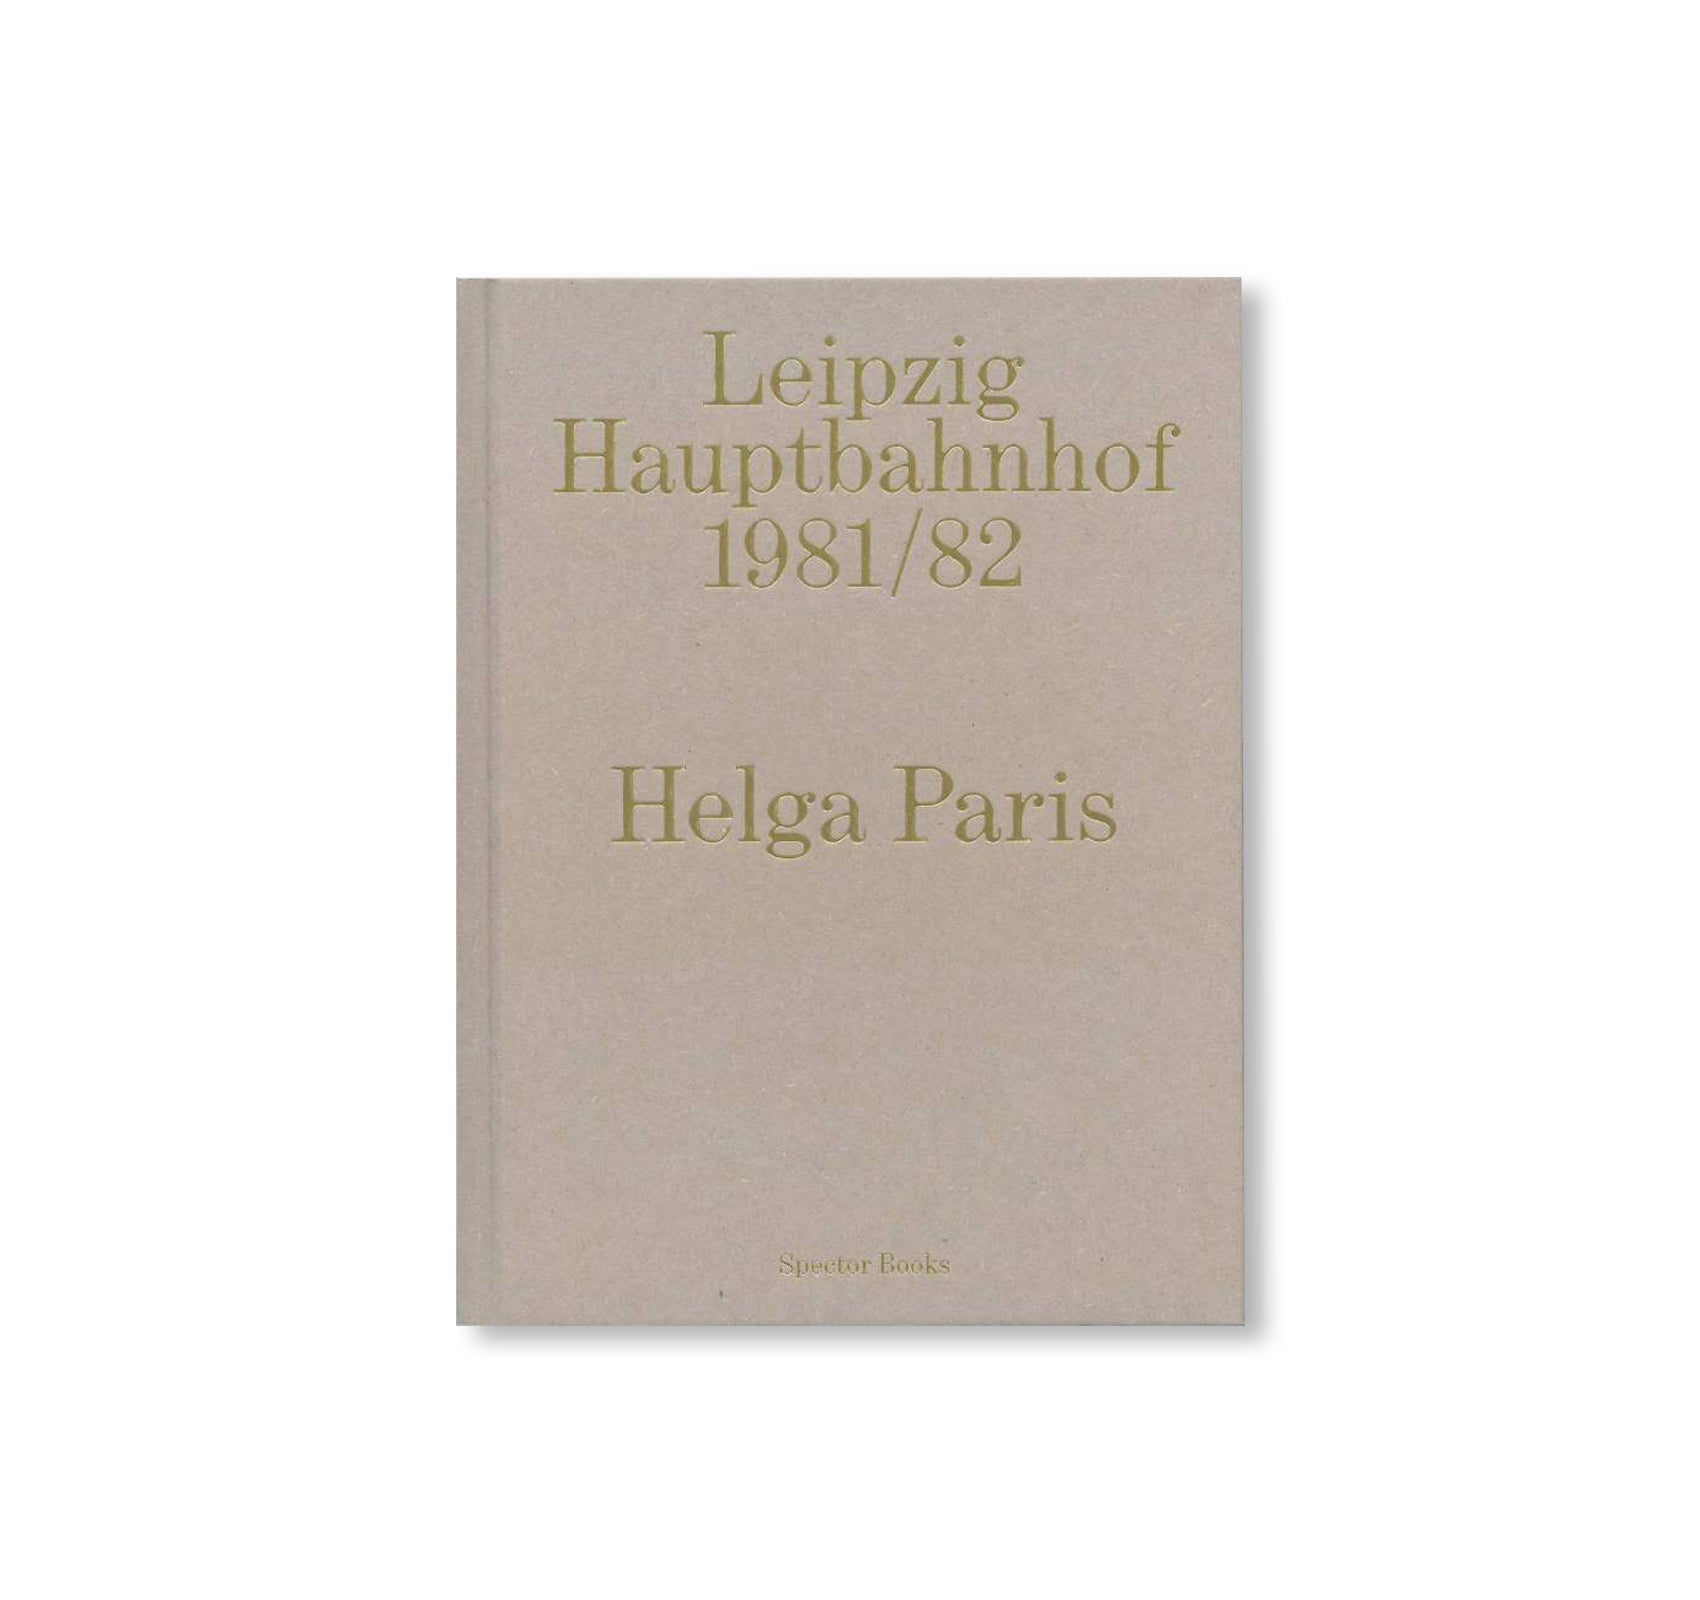 LEIPZIG HAUPTBAHNHOF 1981/82 by Helga Paris